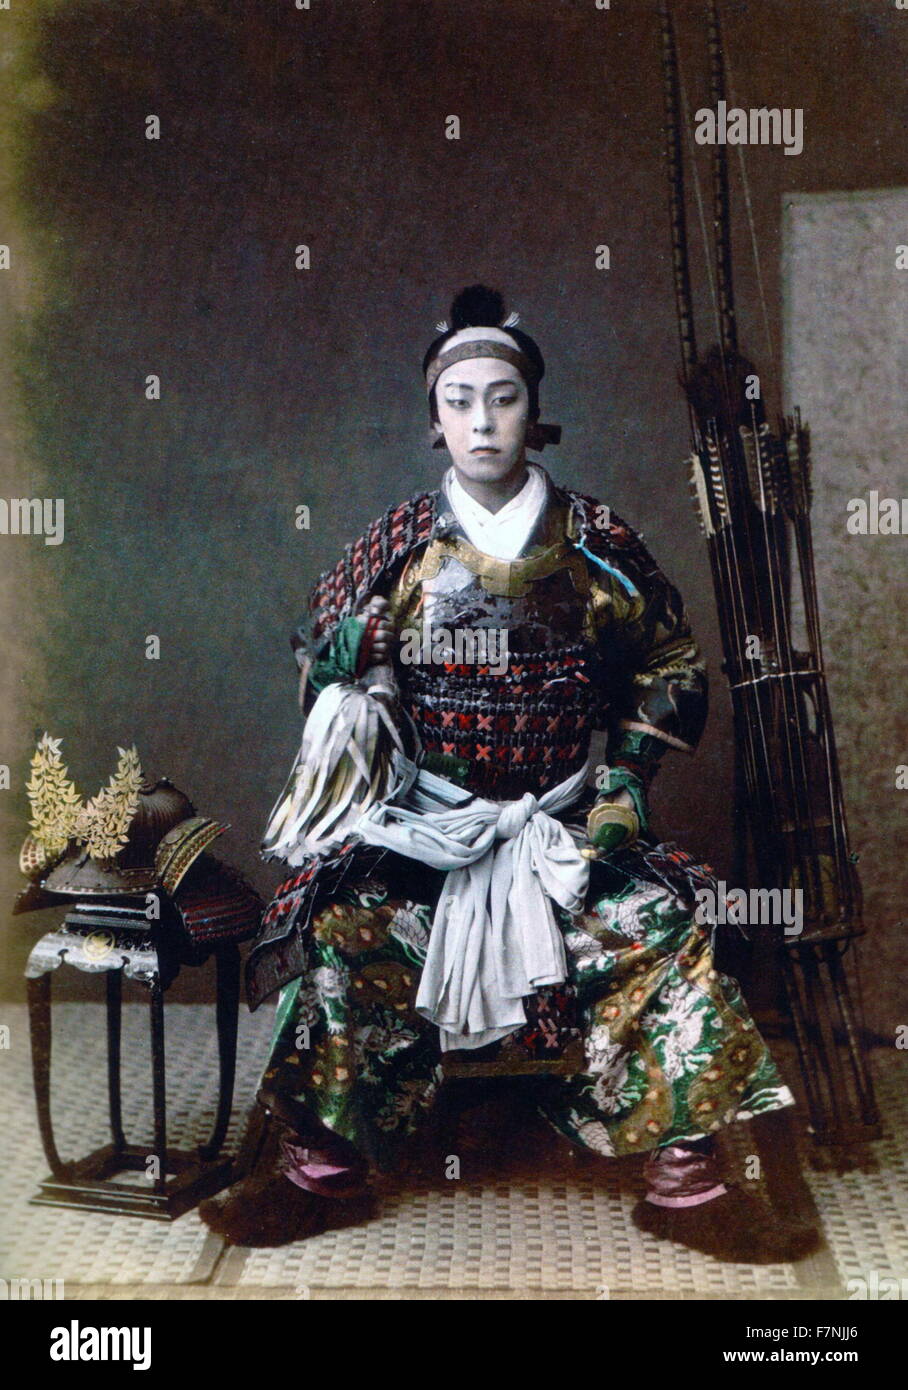 Japanese Samurai warrior, Vintage photograph from japan 1867 Stock Photo